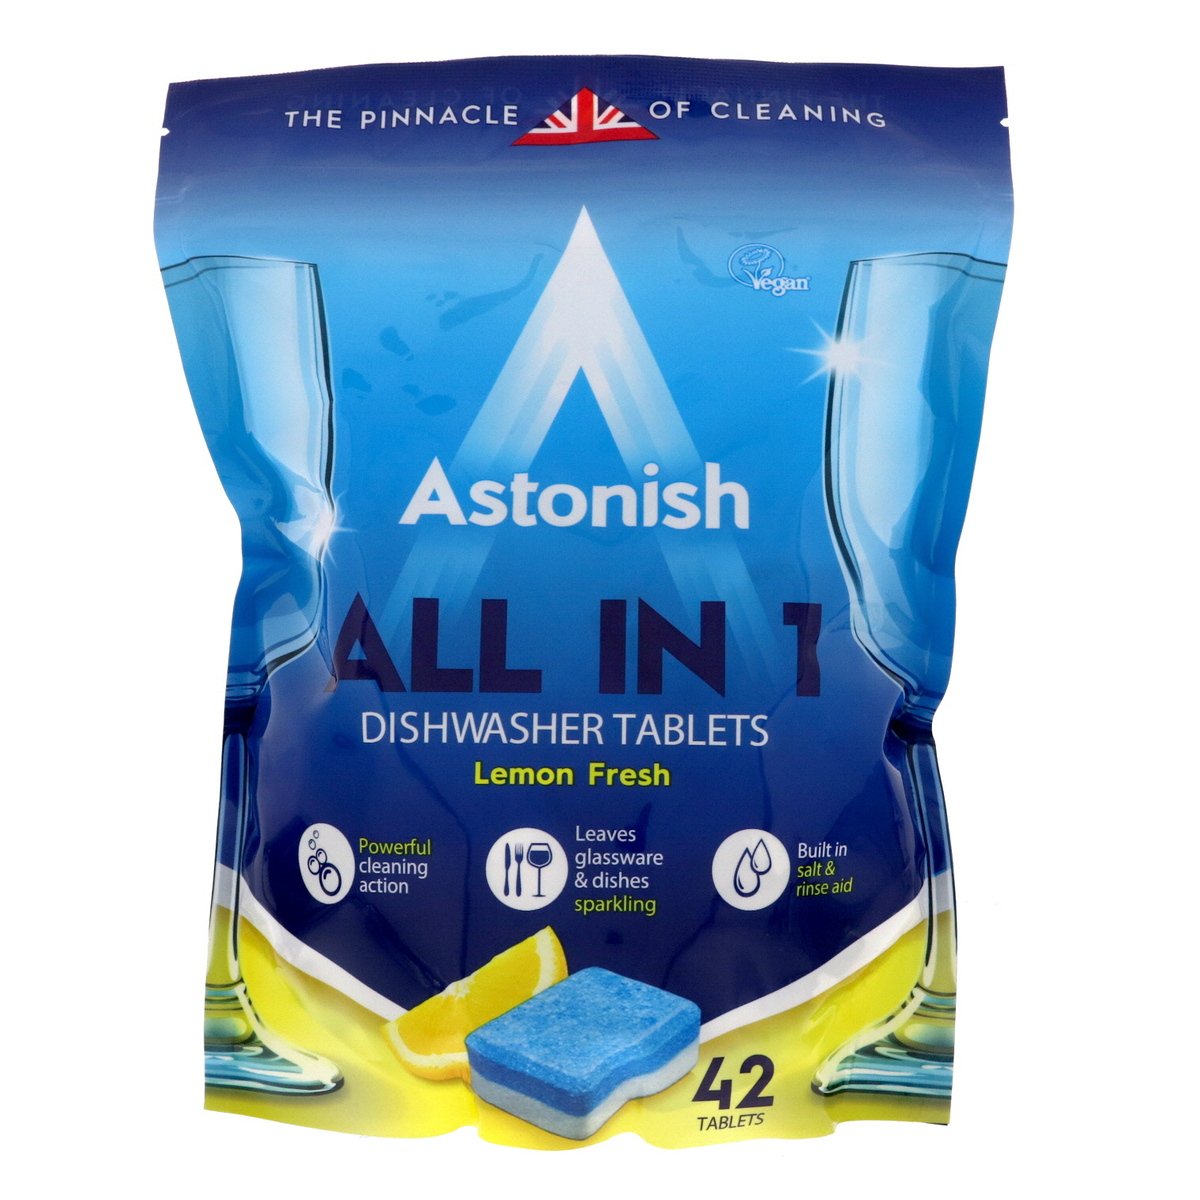 Astonish All in 1 Dishwasher Tablets Lemon Fresh 42pcs